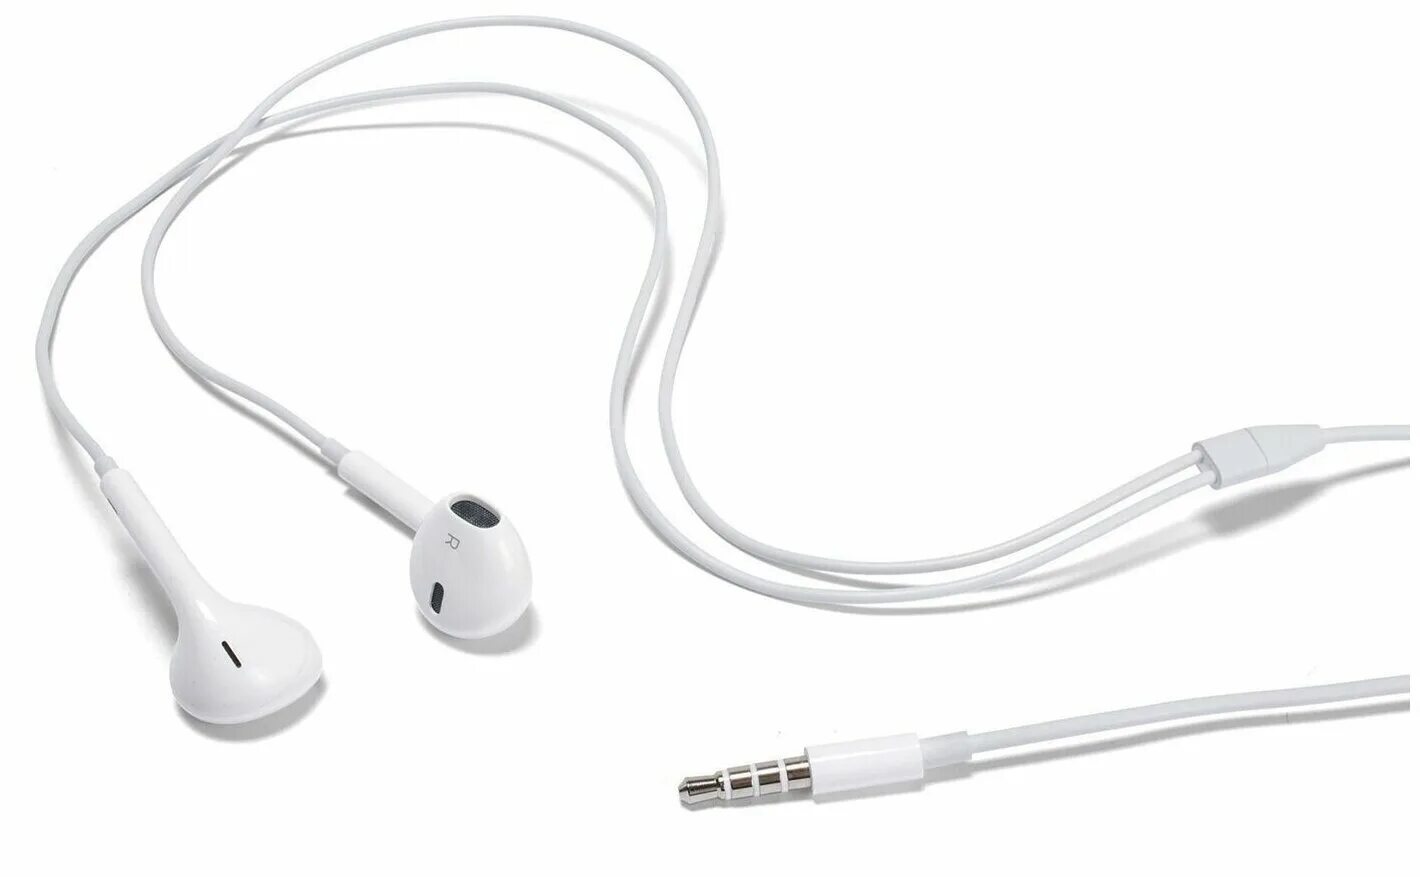 Airpods 3 микрофон. Наушники Apple Earpods (3.5 мм), белый. Наушники Apple Earpods с разъёмом 3.5. Md827fe/a наушники для Apple Earpods. Наушники с микрофоном Apple Earpods Headphone Plug (mnhf2zm/a).